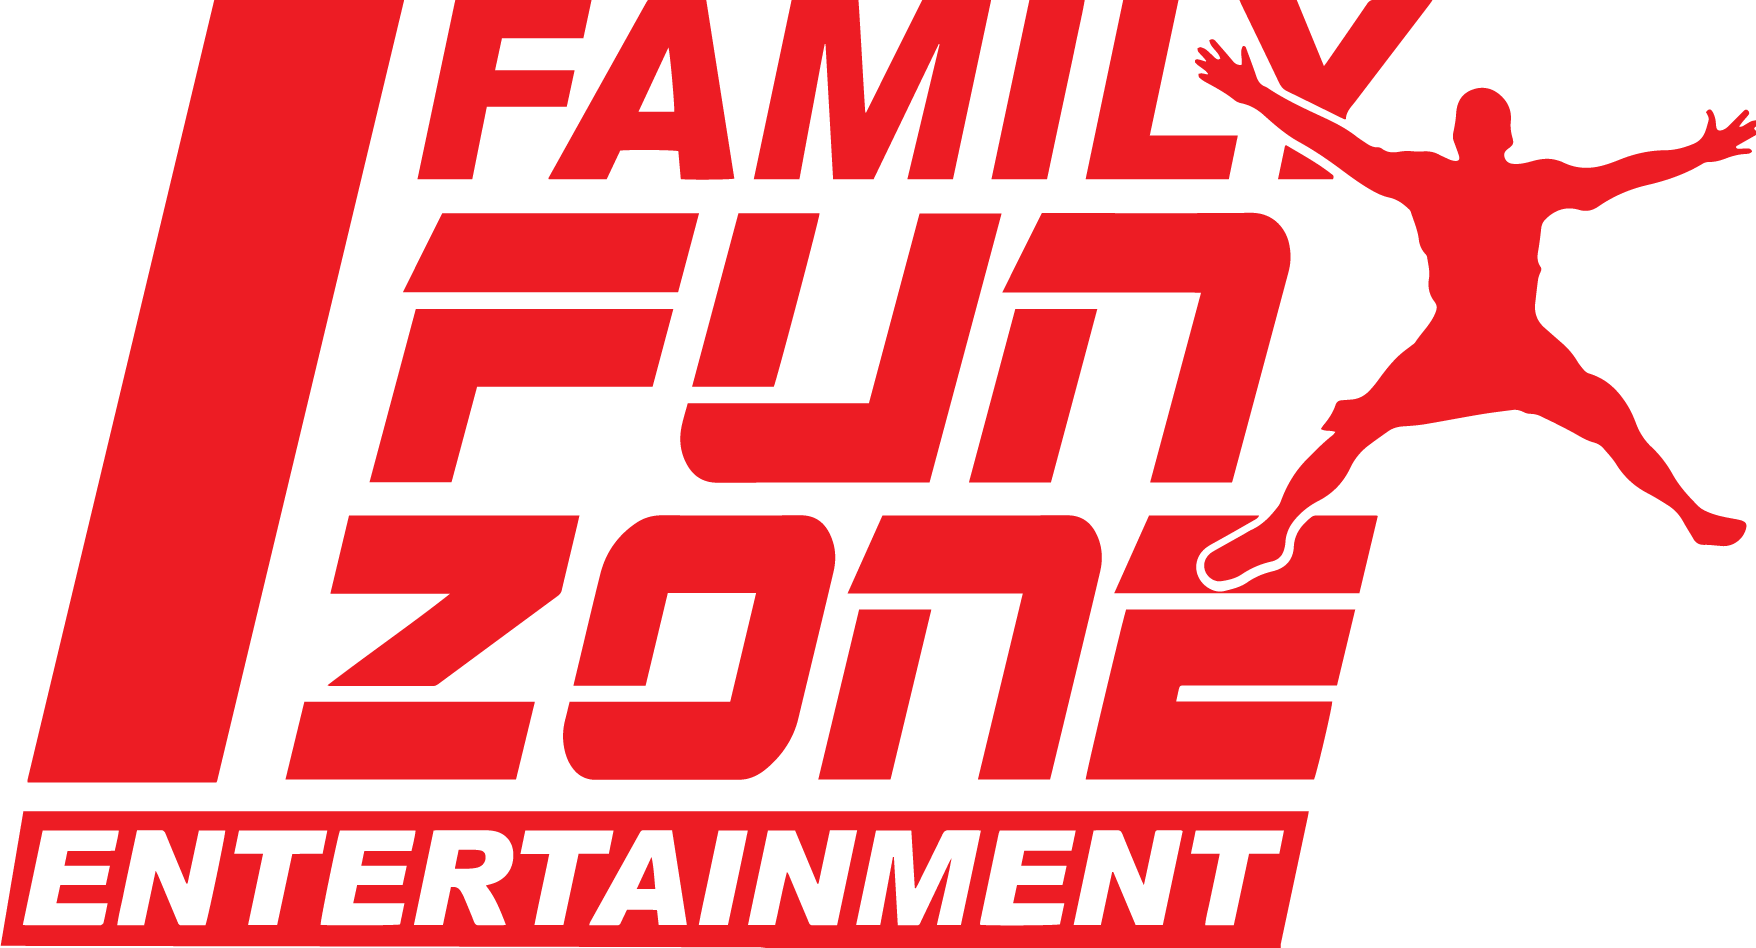 Family Fun Zone